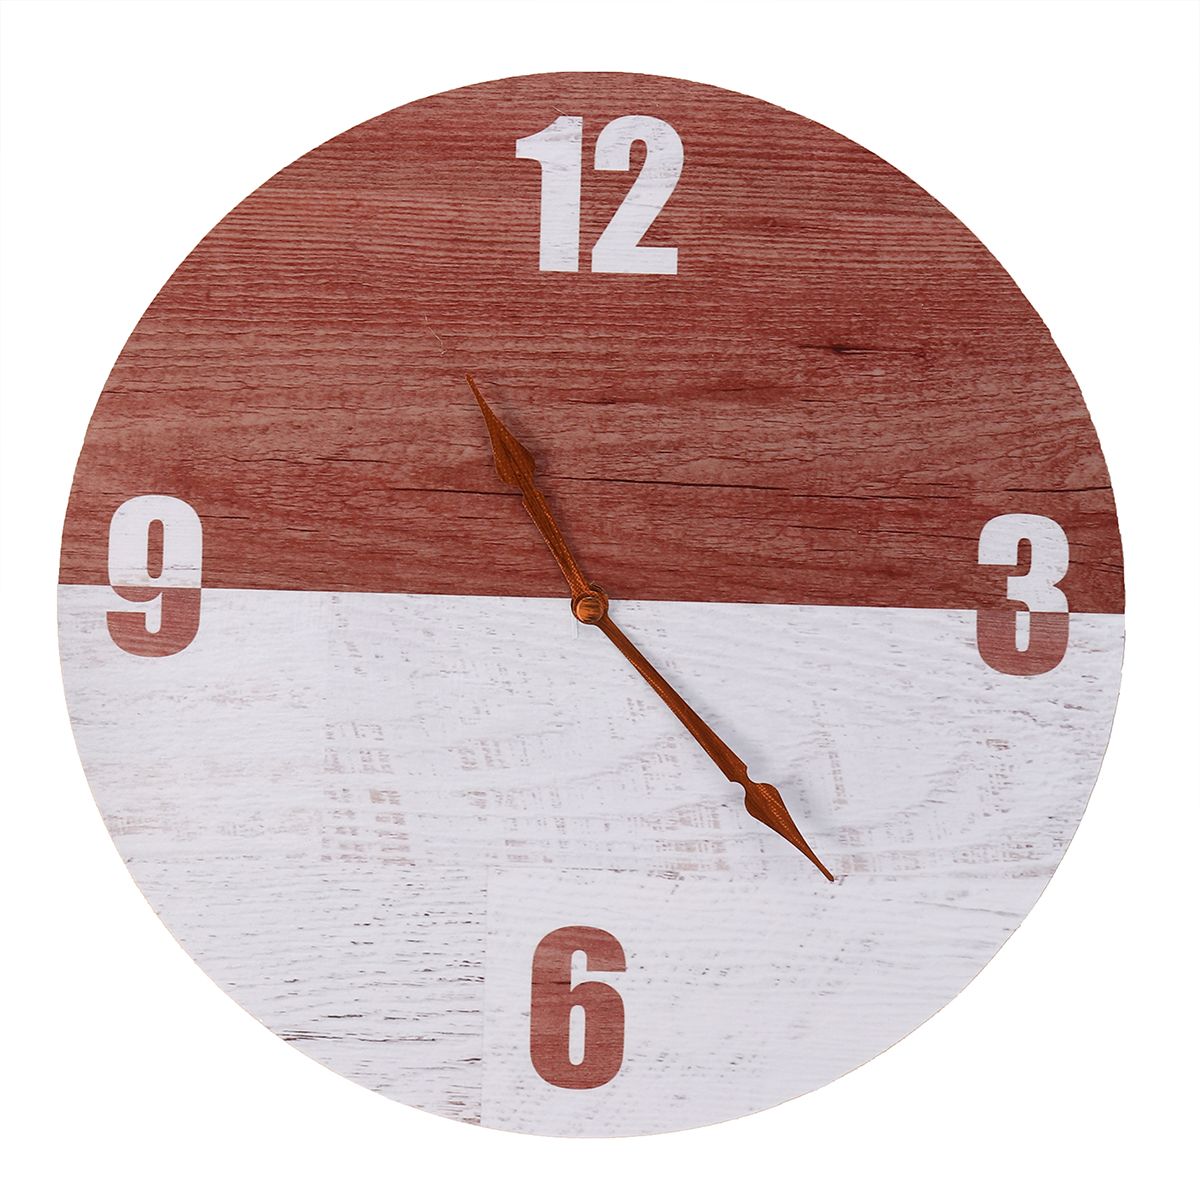 11-DIY-Digital-Wood-Wall-Clock-Diameter-28CM-Seamless-Hook-For-Home-Office-Bar-1485108